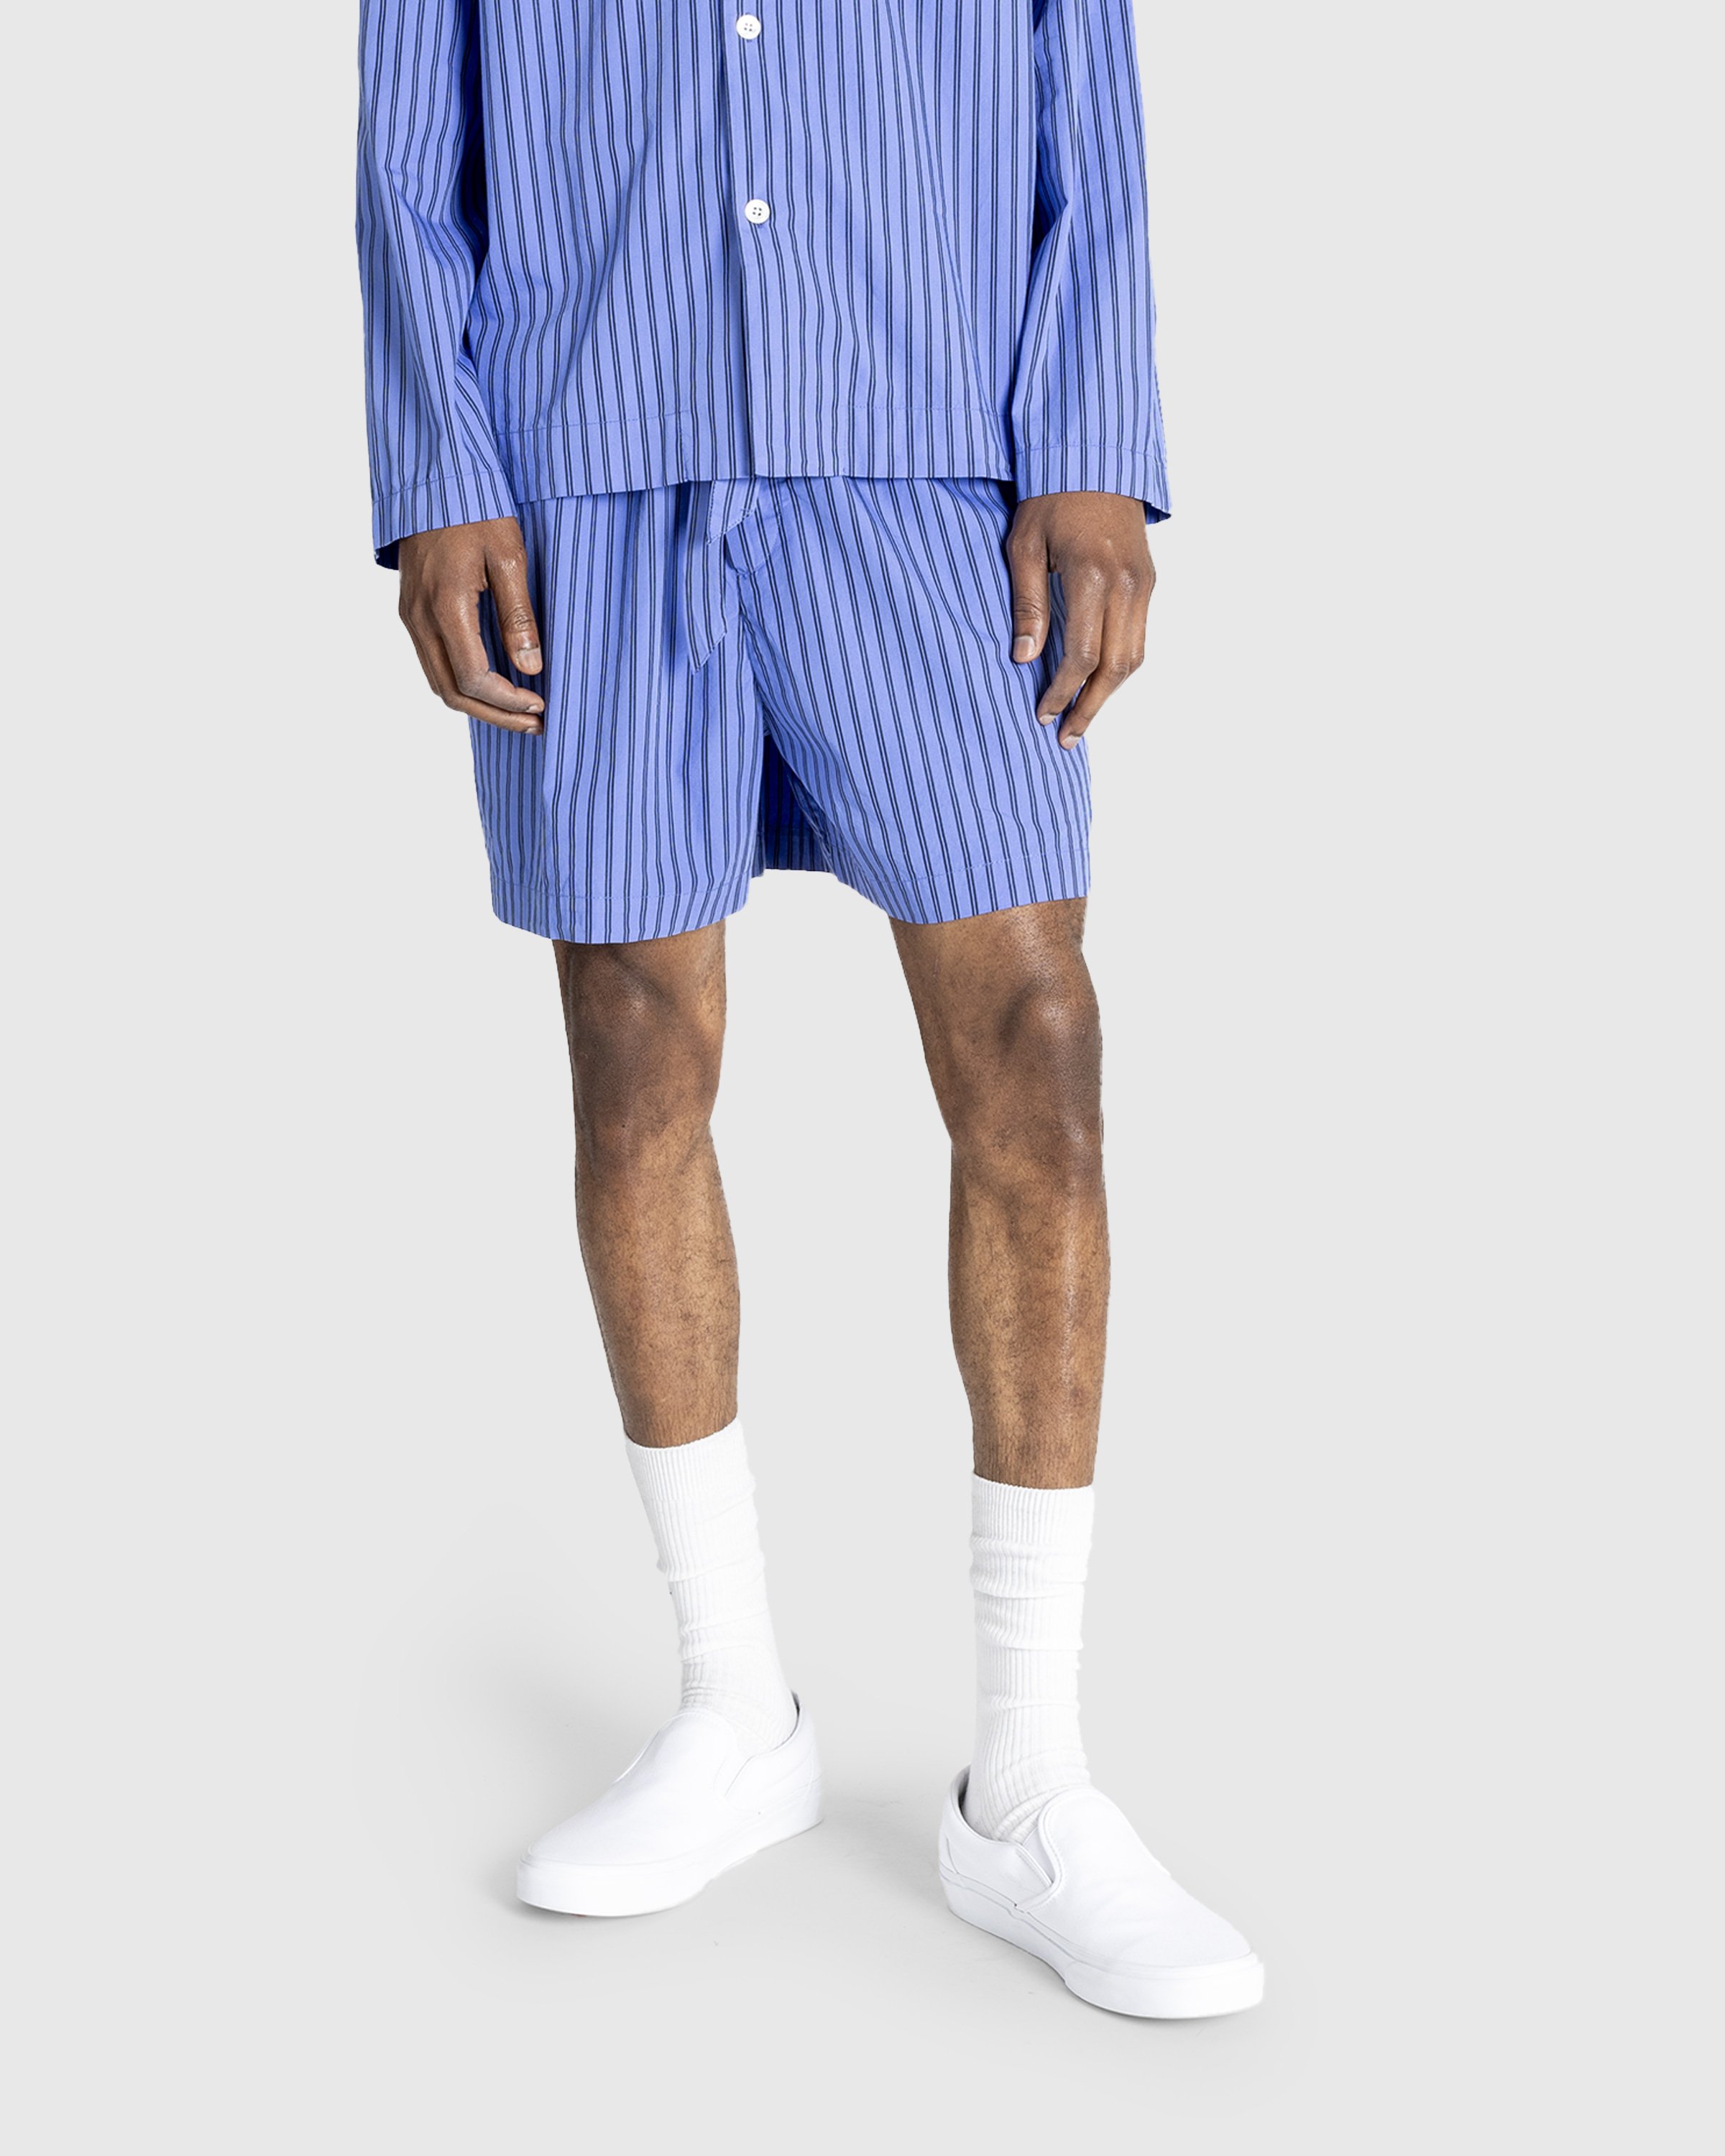 Tekla - Cotton Poplin - Pyjamas Shorts Boro Stripes - Clothing - Blue - Image 2